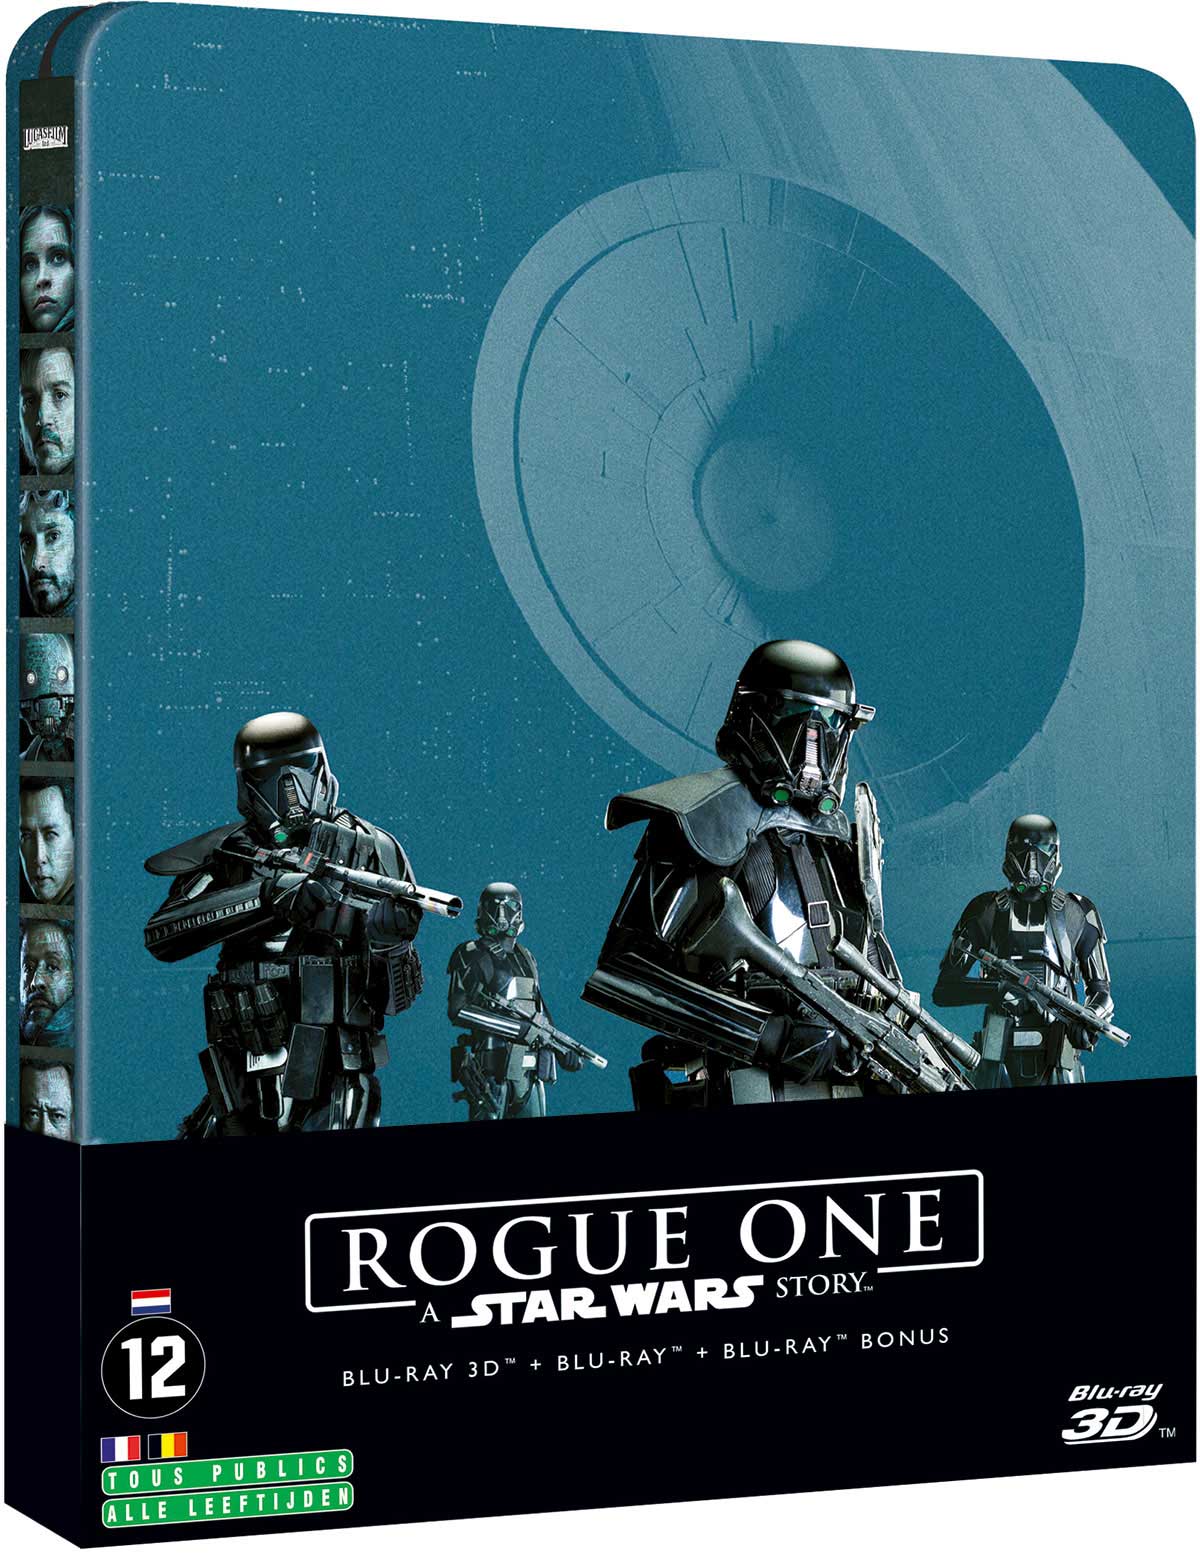 Rogue One: A Star Wars Story - Blu-ray 3D/Blu-ray/Blu-ray bonus - SteelBook